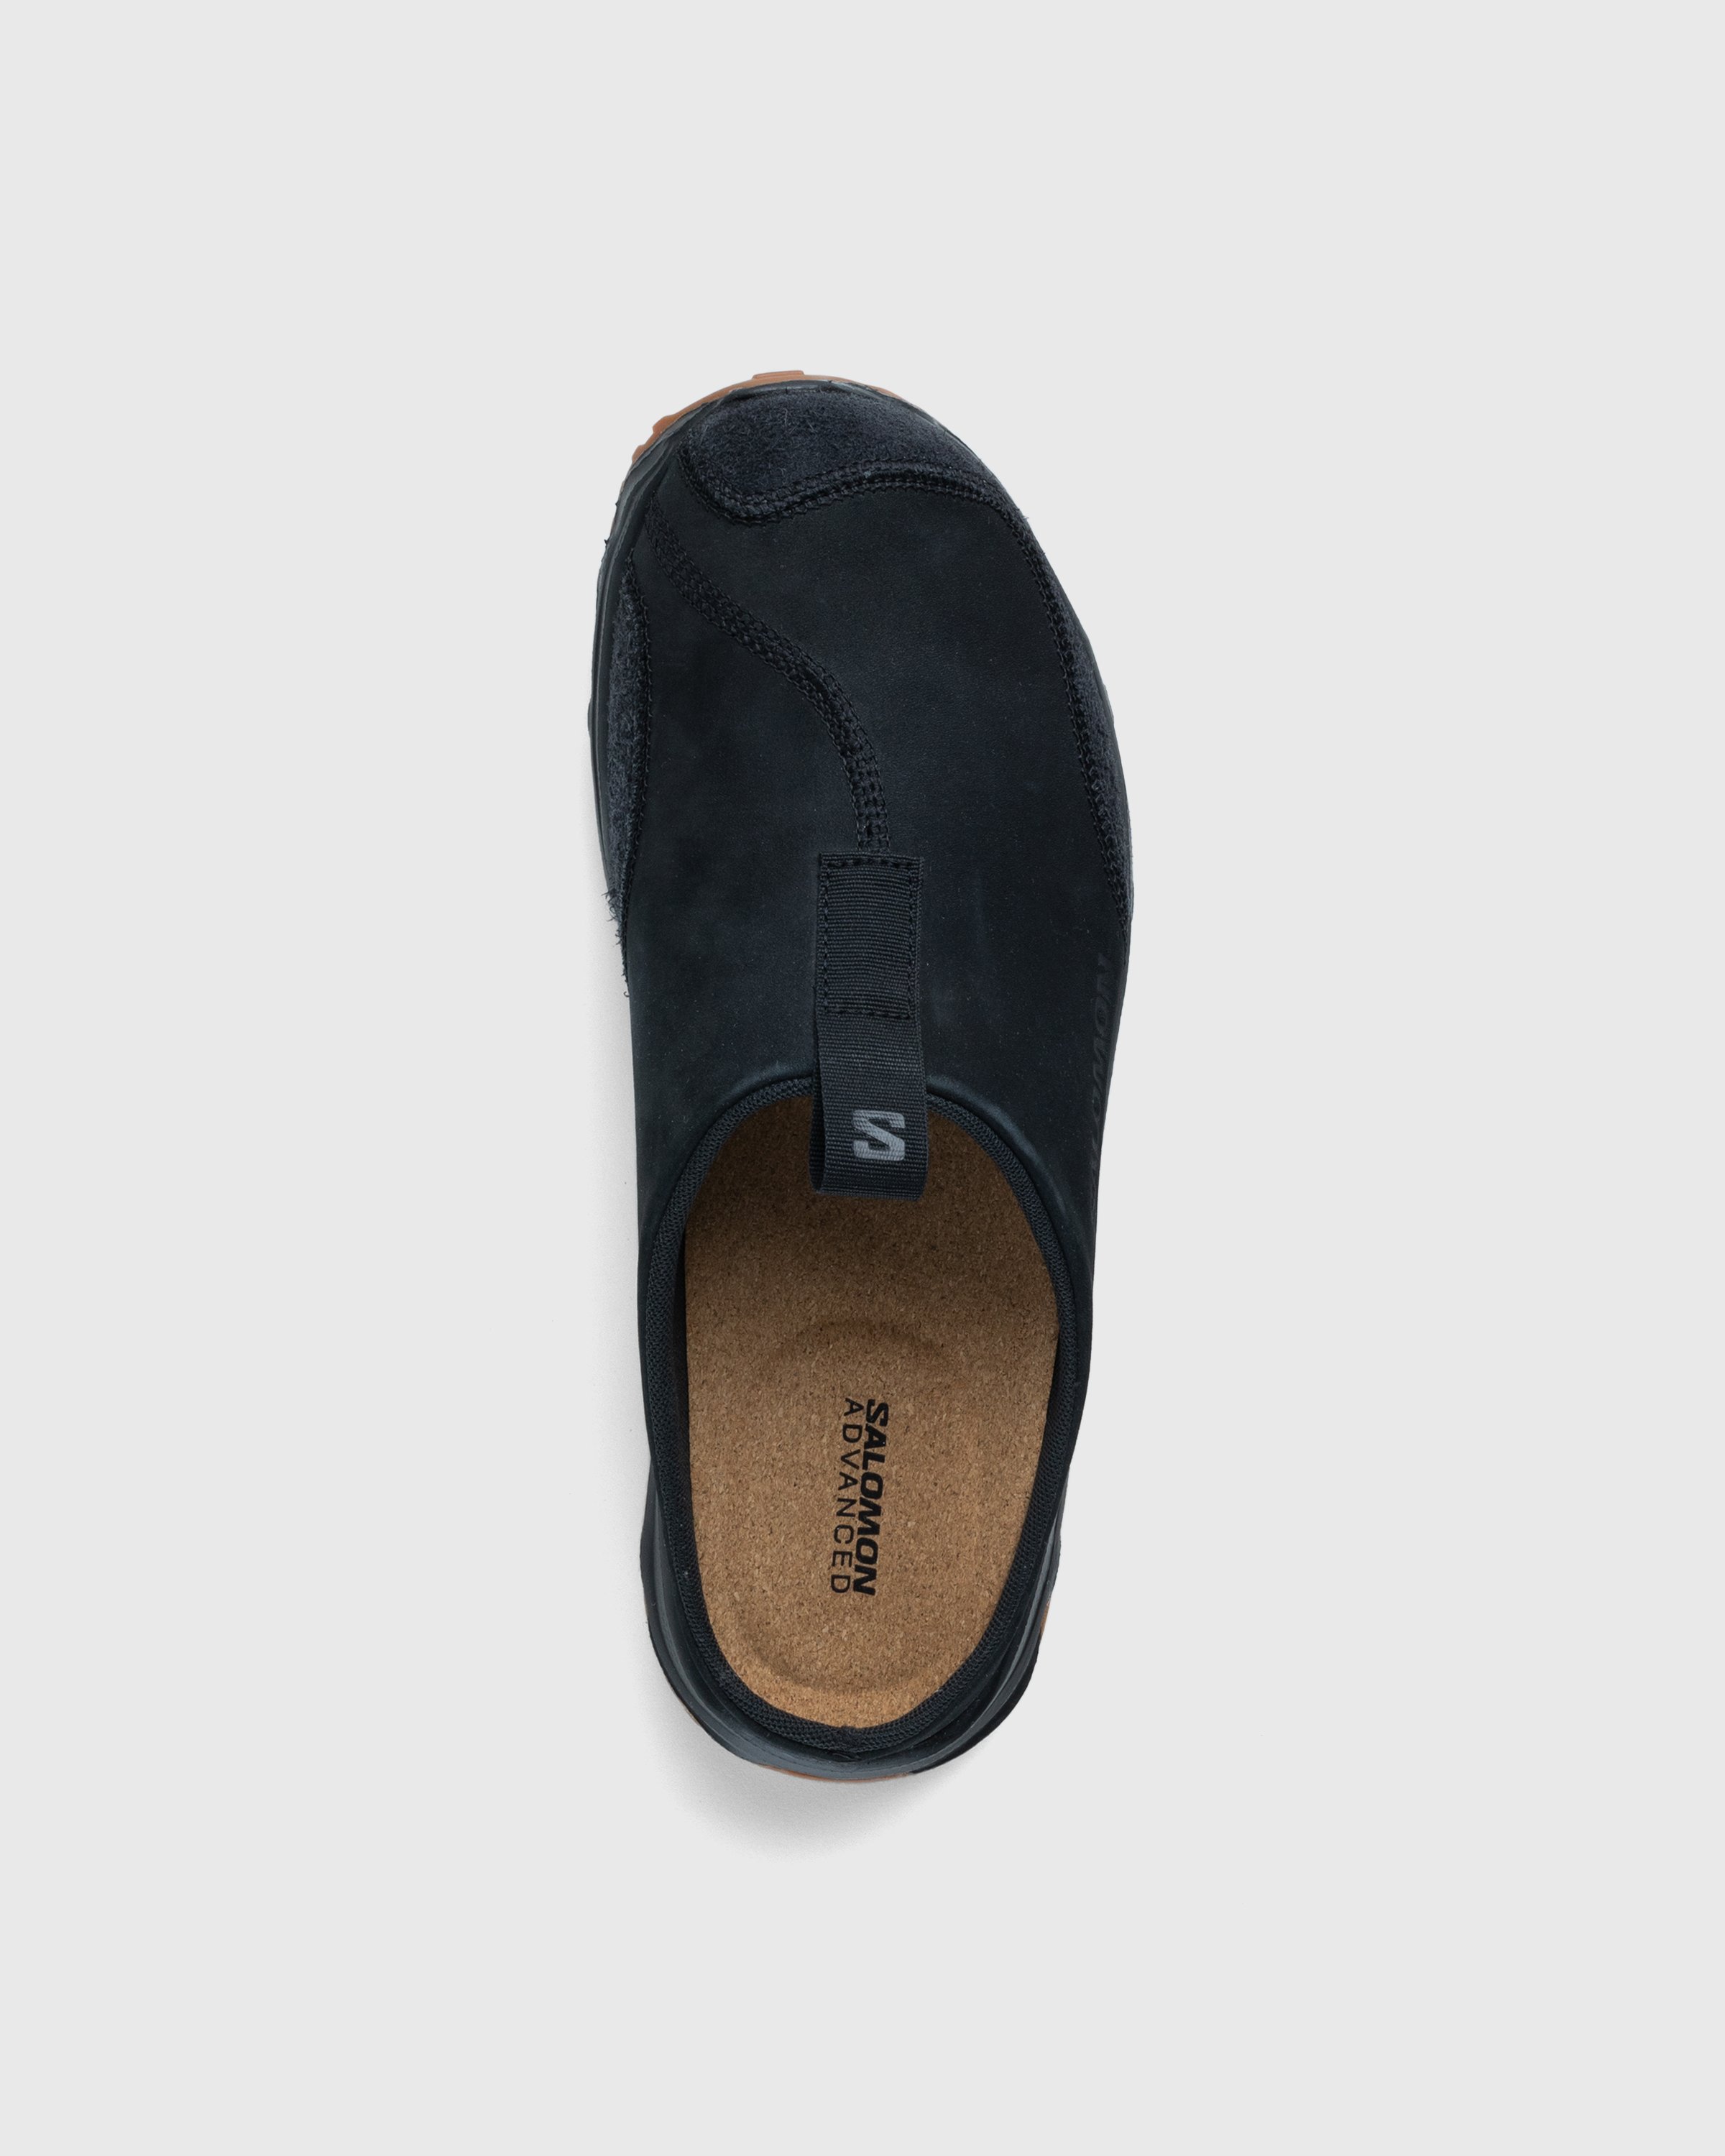 Salomon - RX Slide Leather Advanced Black - Footwear - Black - Image 5